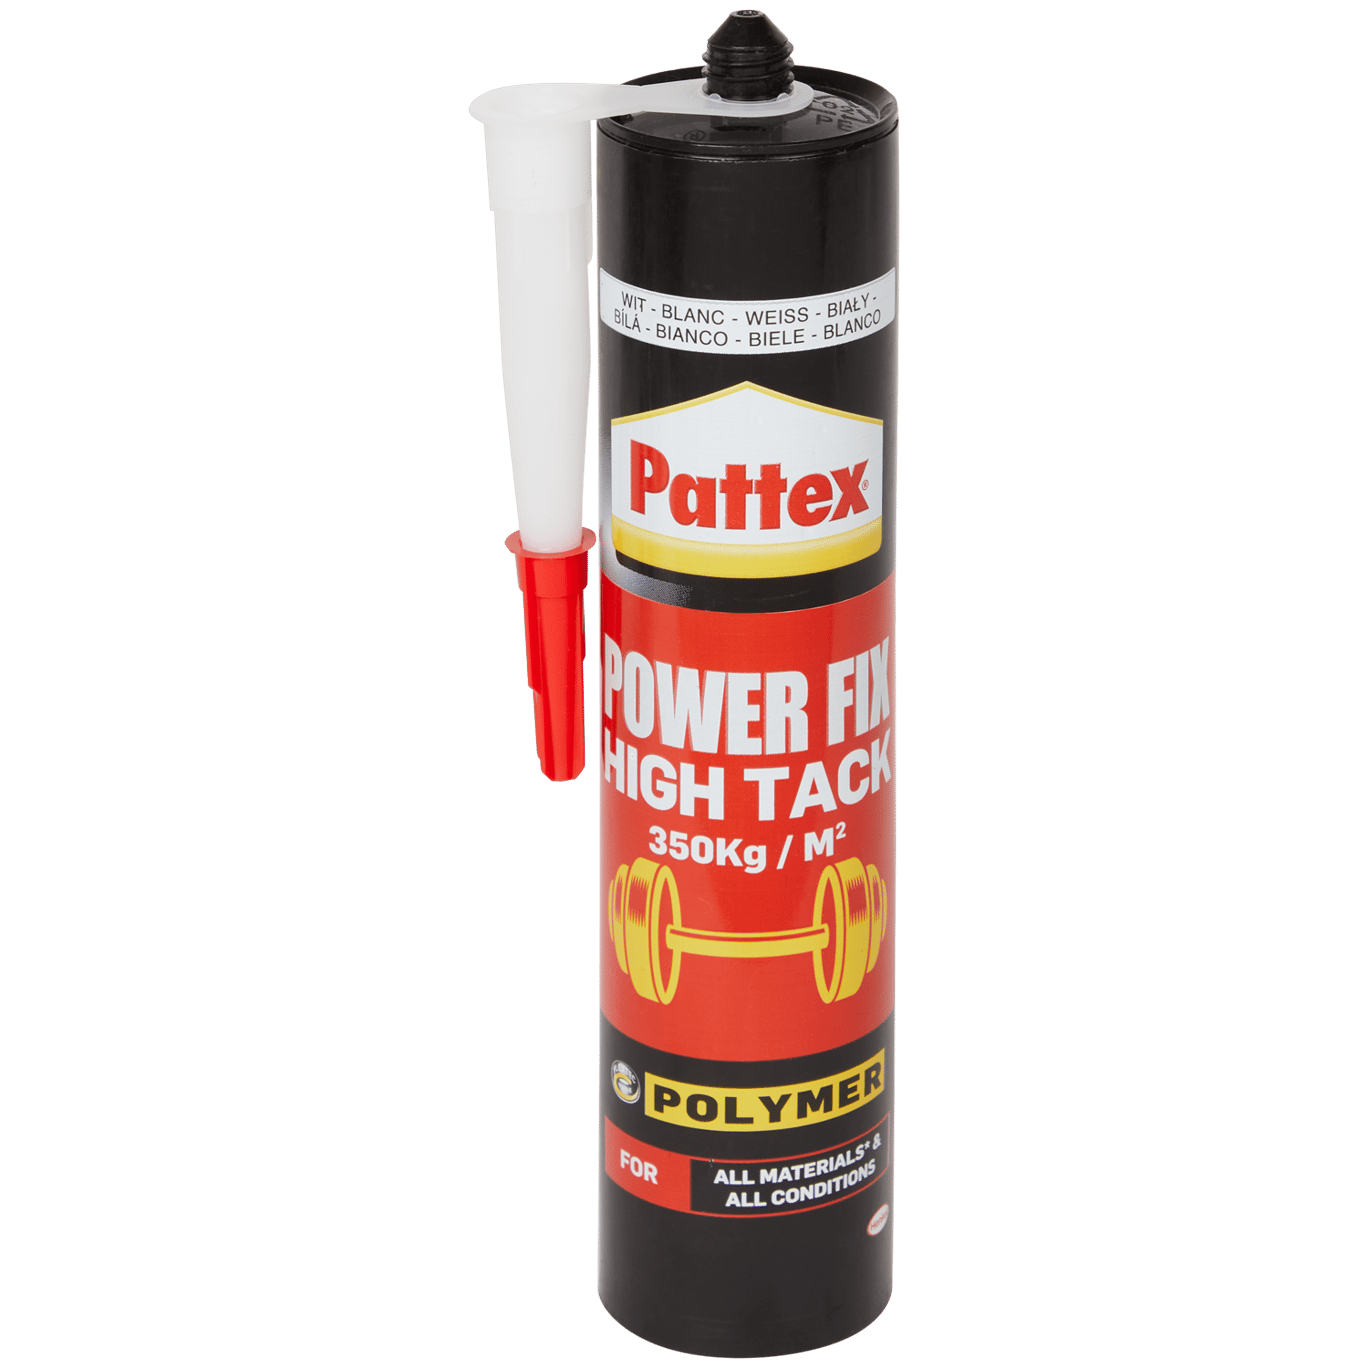 Pattex Power Fix High Tack